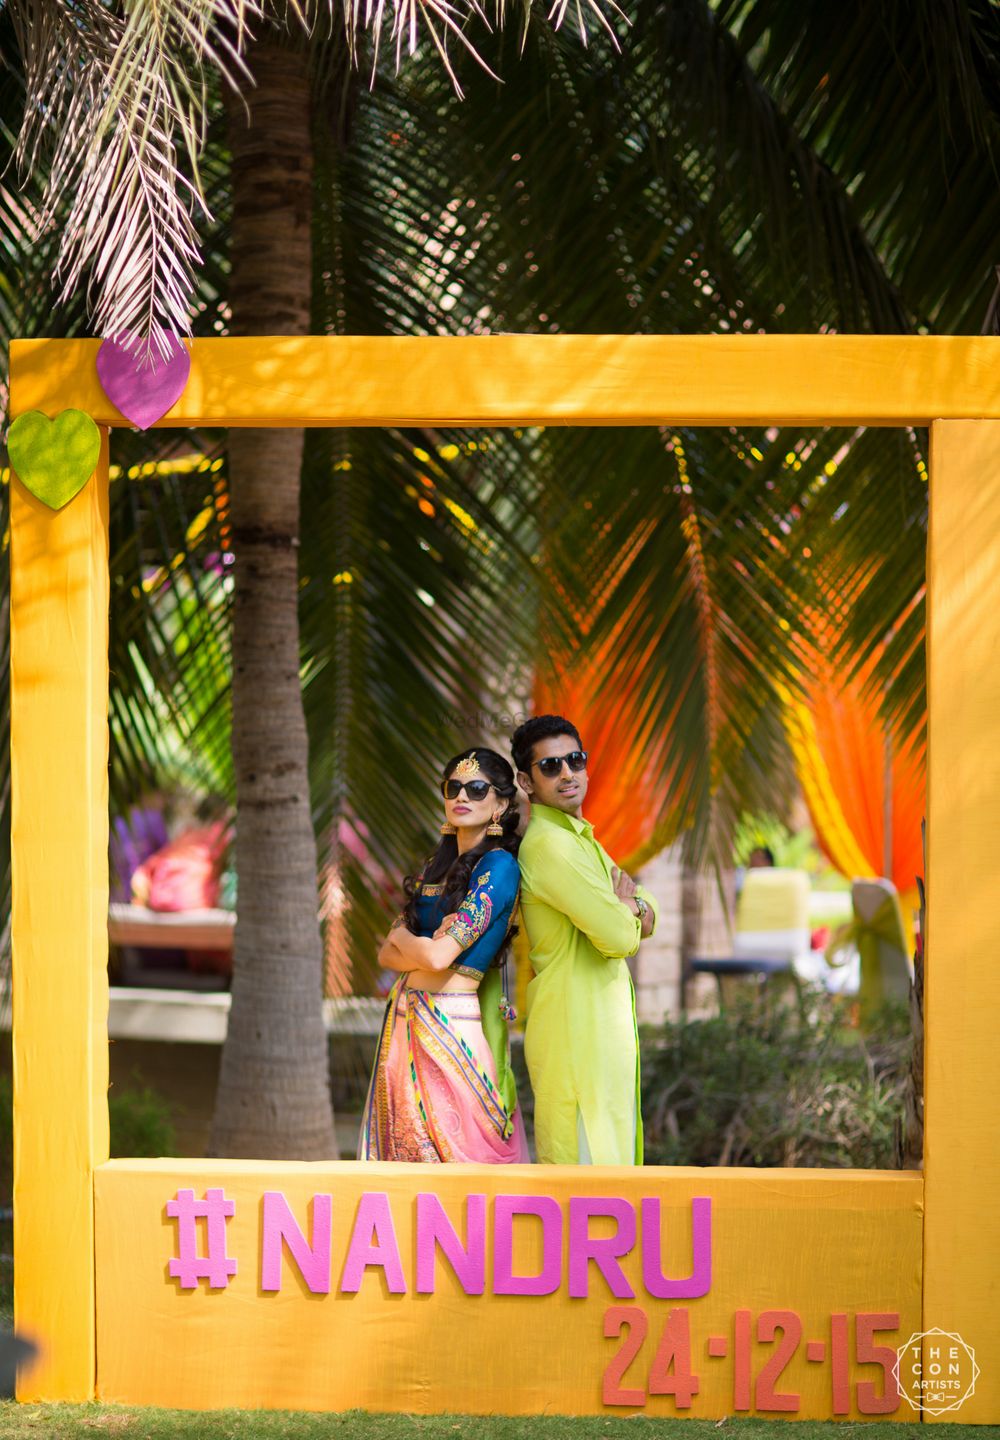 Photo of Photobooth frame at Indian wedding